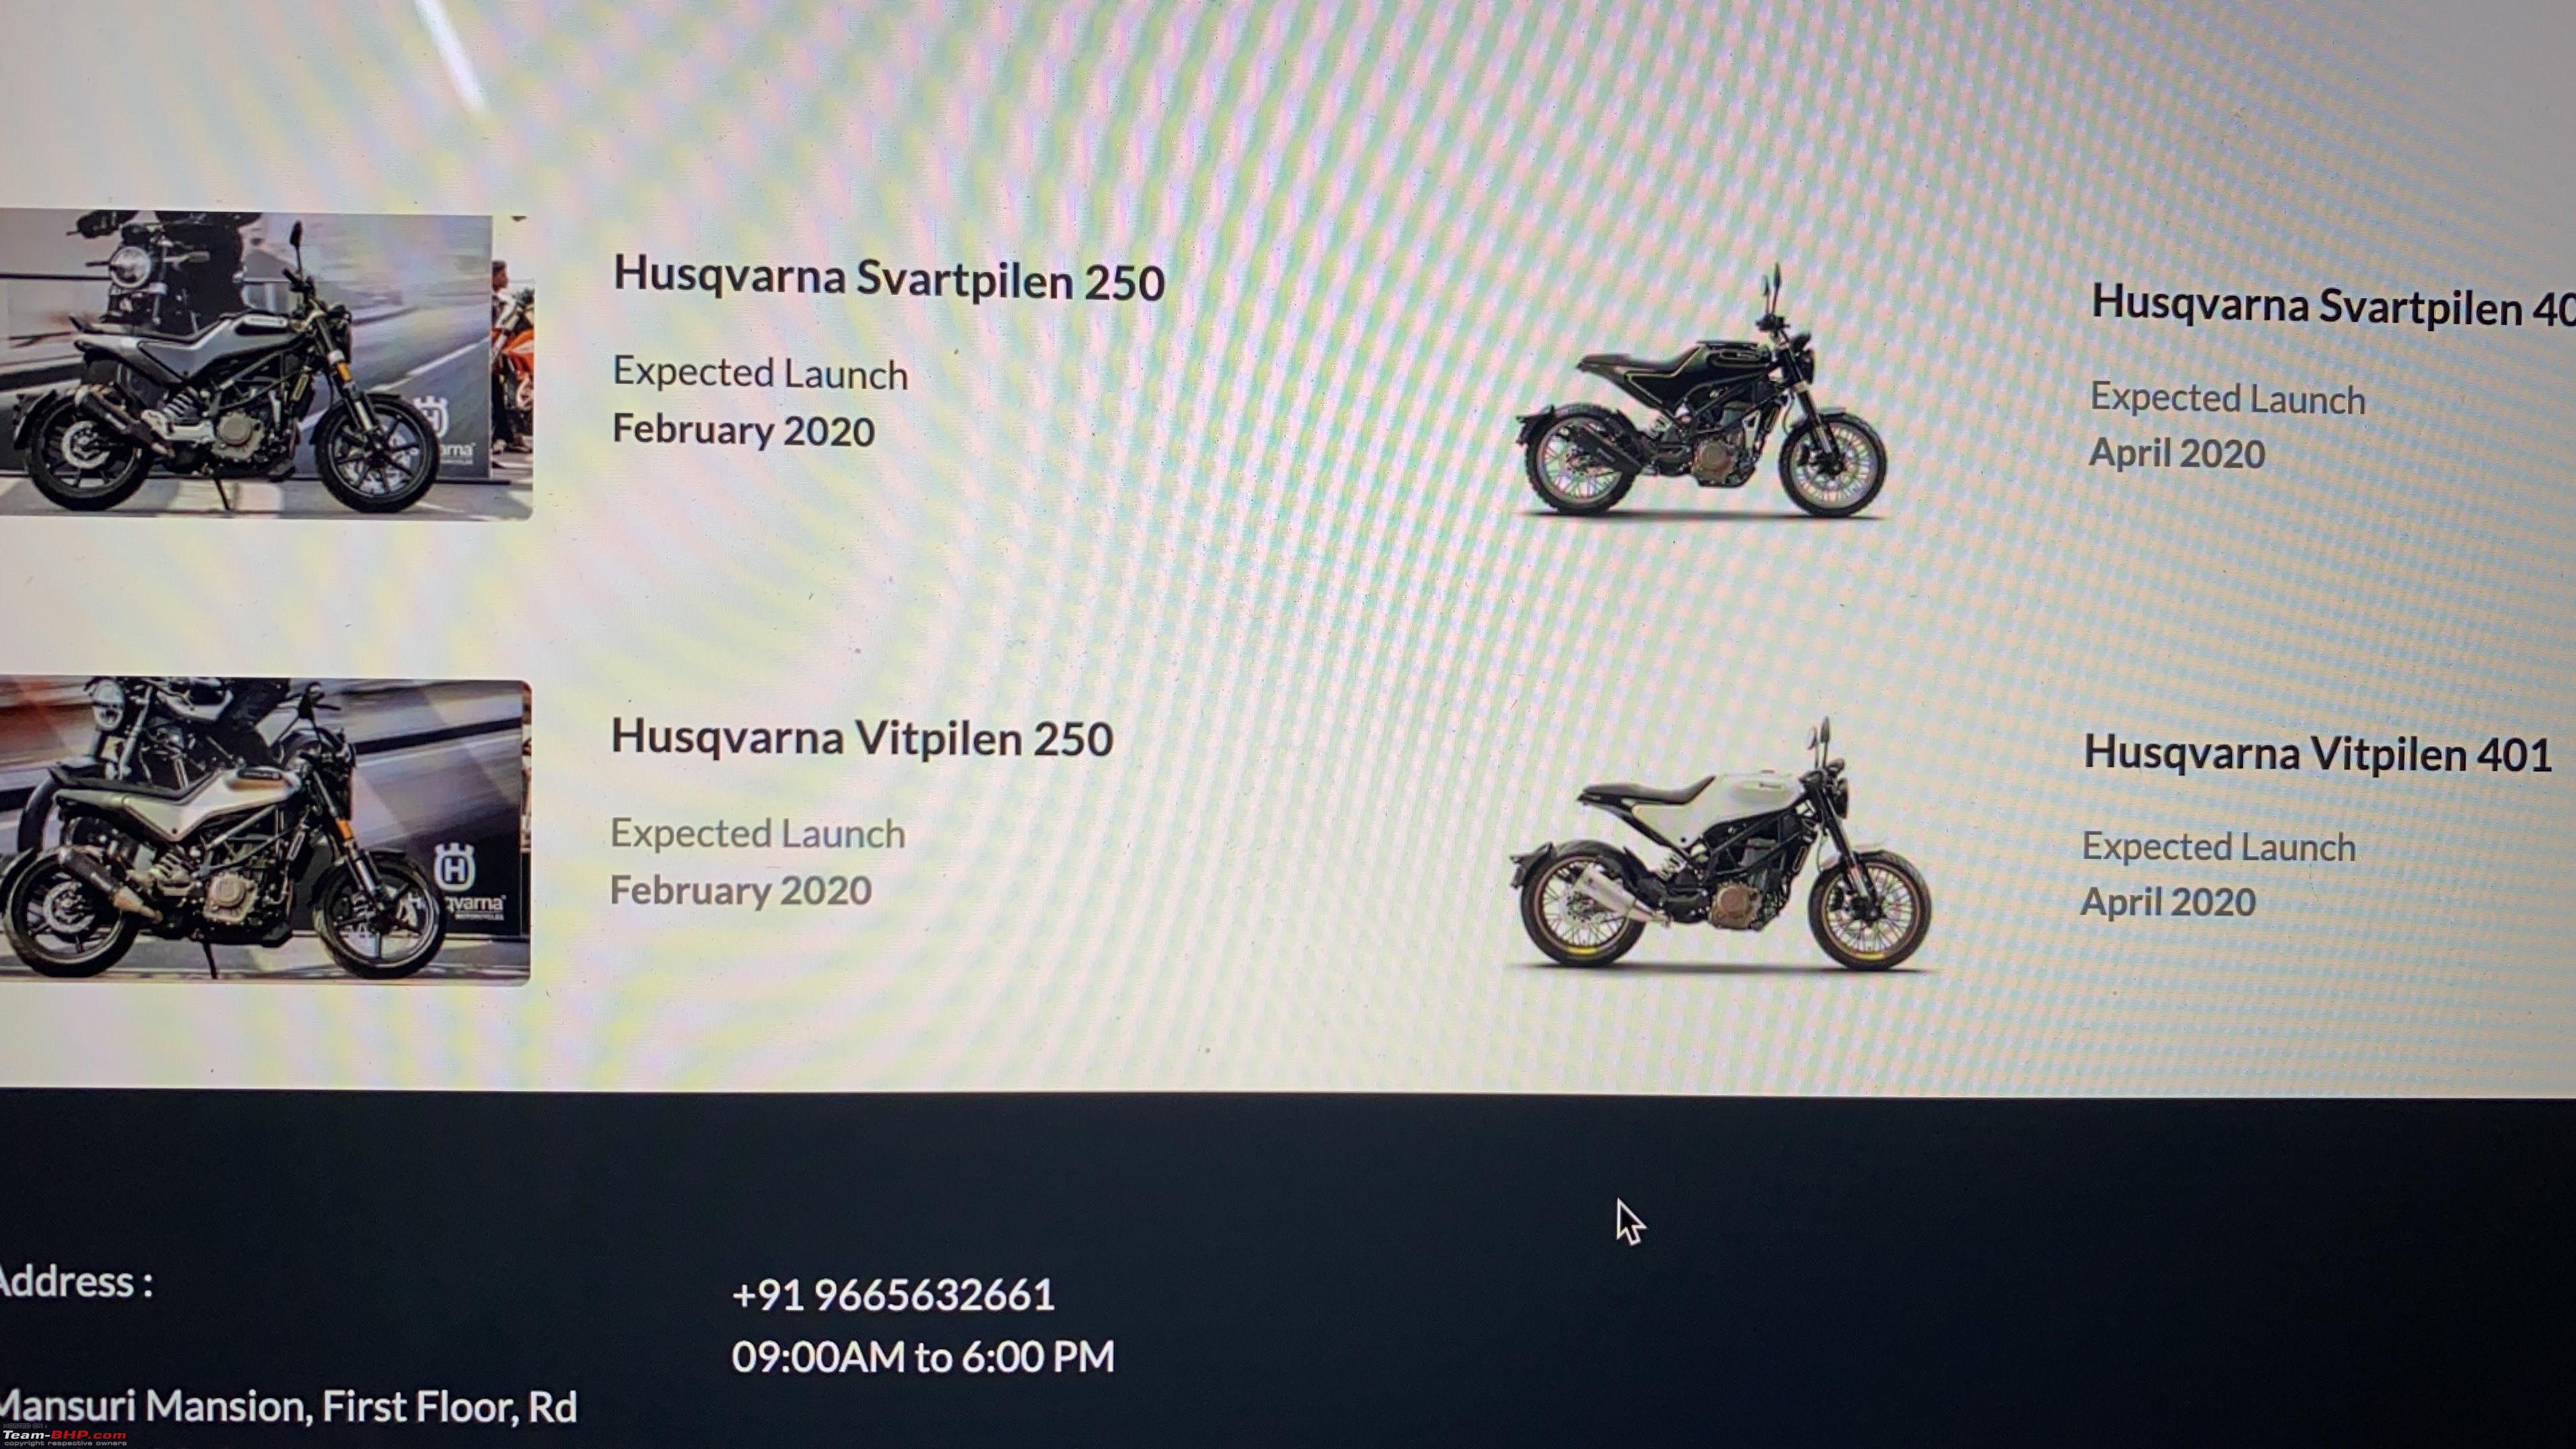 Husqvarna Vitpilen 250, Husqvarna Svartpilen 250 sales to start from  February 2020